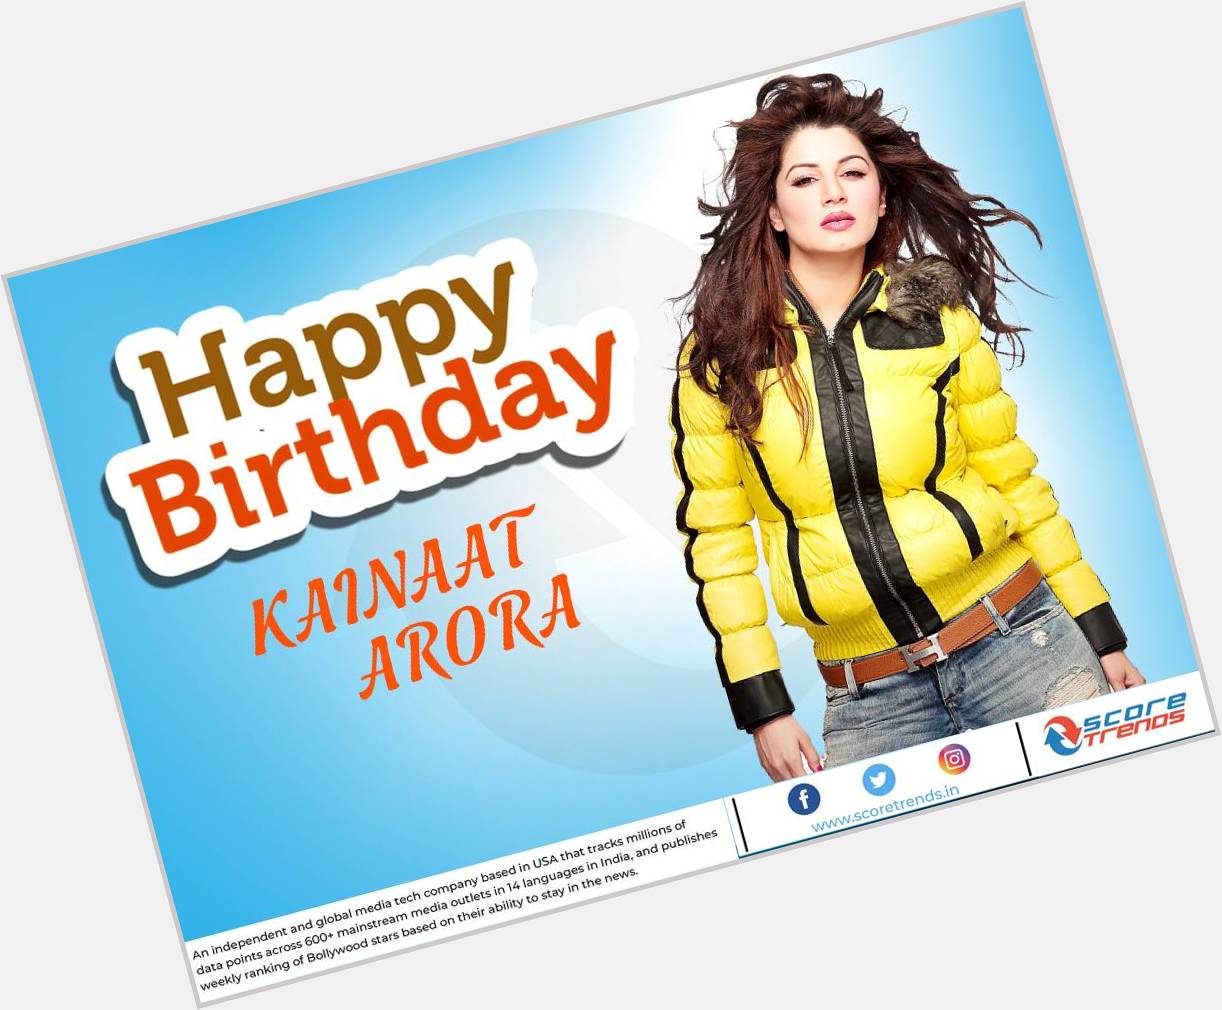 Score Trends wishes Kainaat Arora a Happy Birthday!! 